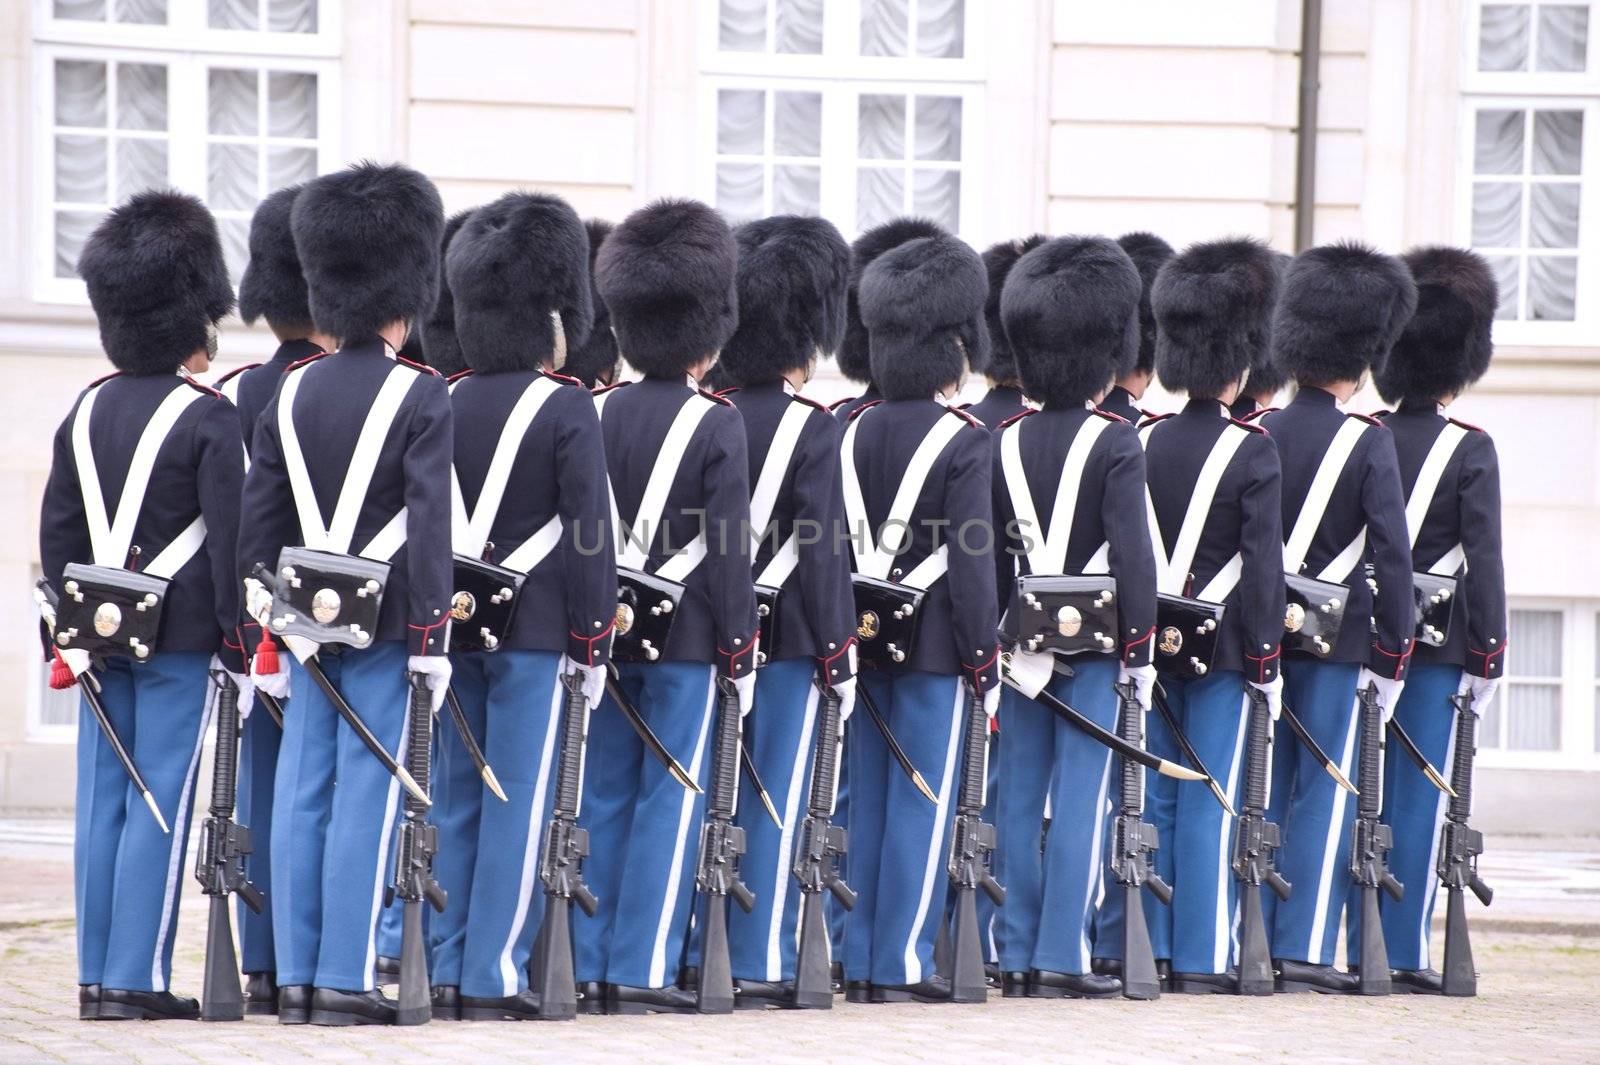 Denmark Royal guard by Alenmax